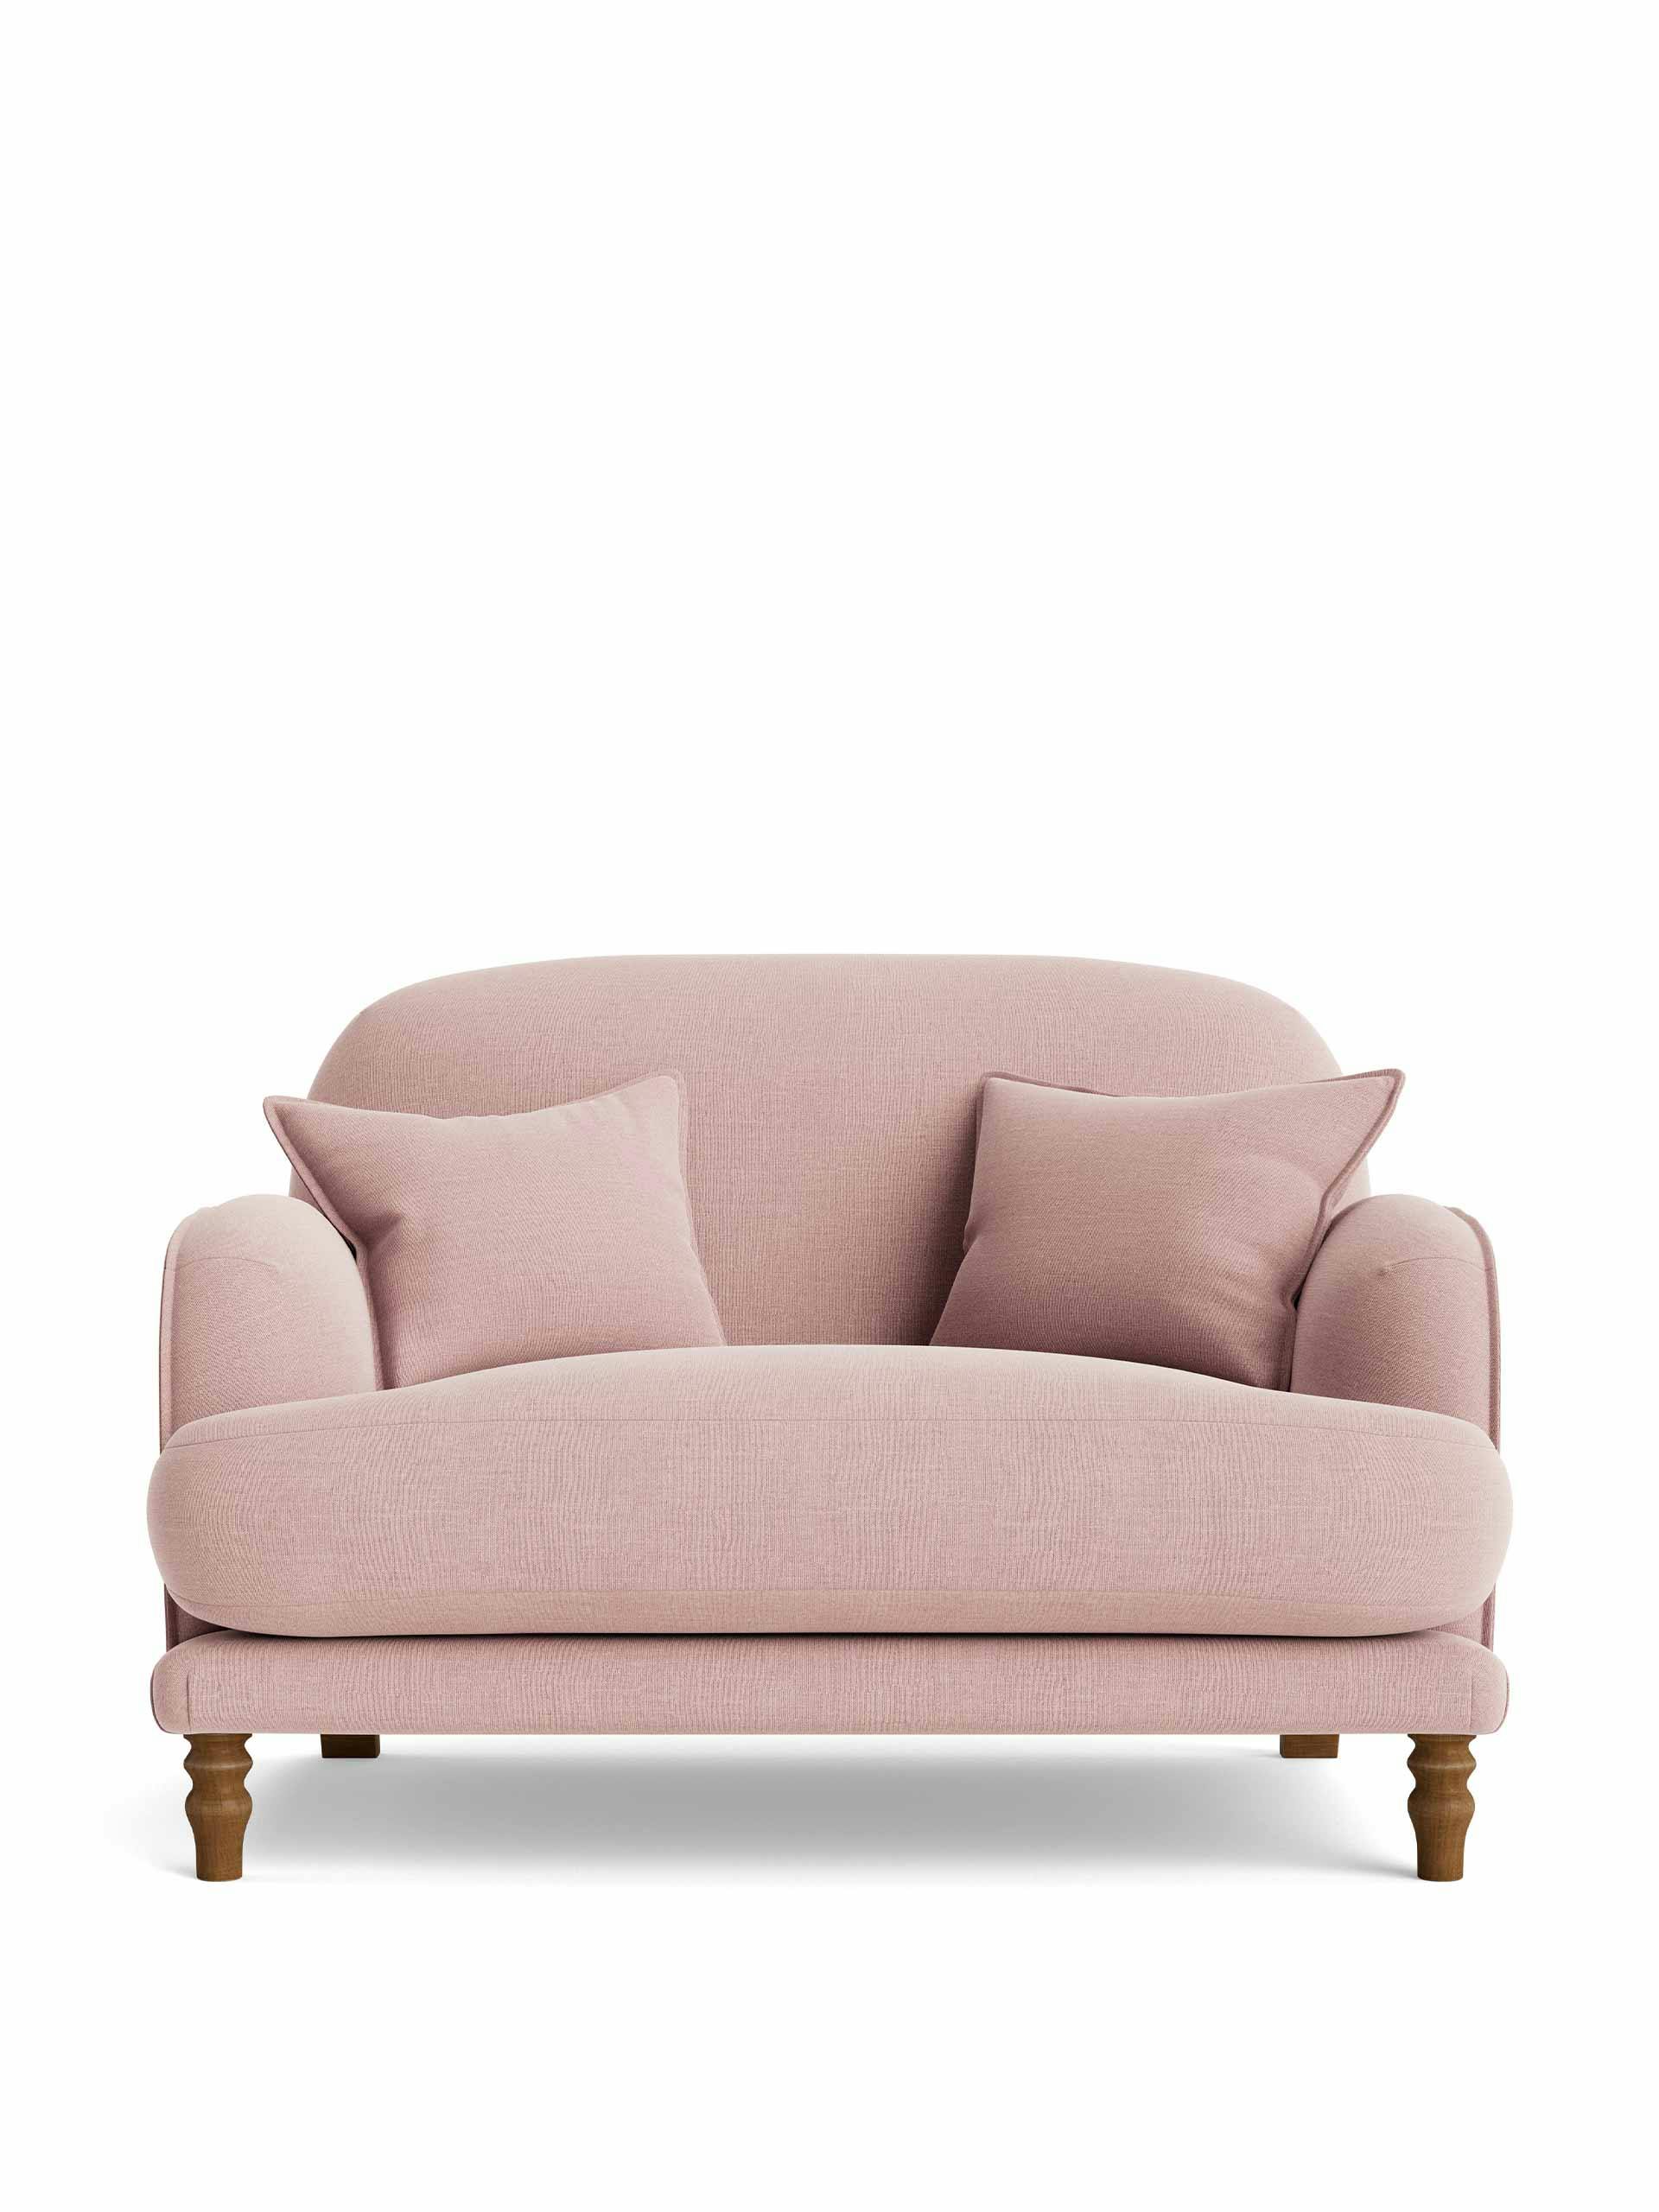 Love seat sofa in rosewater